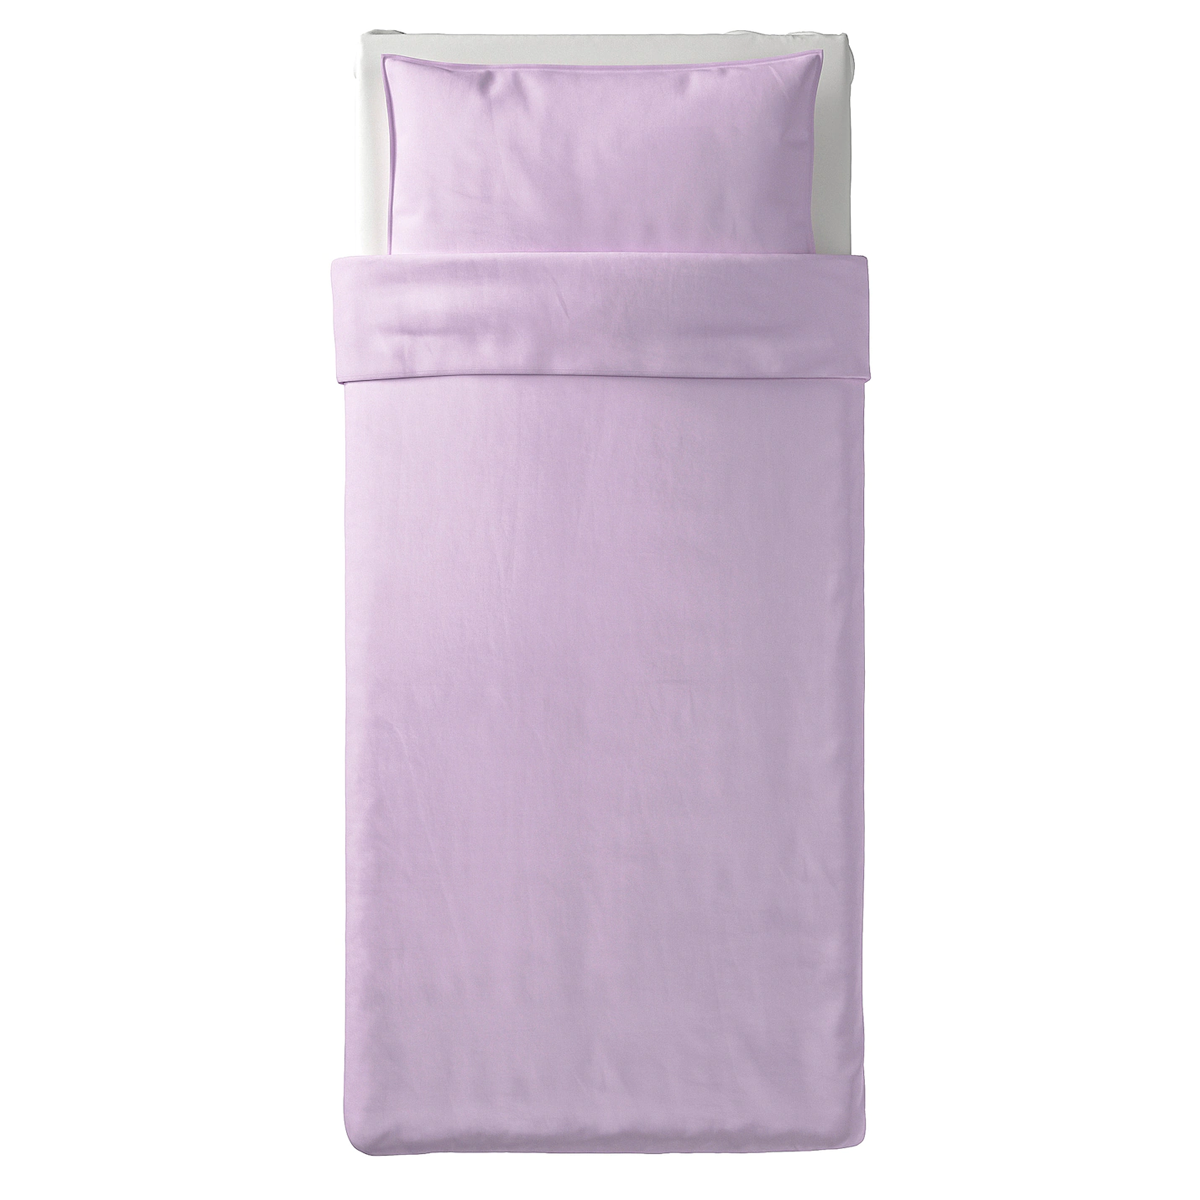 Quilt cover and pillowcase, Light Lillac, 150x200/50x80 cm - ANGSLILJA